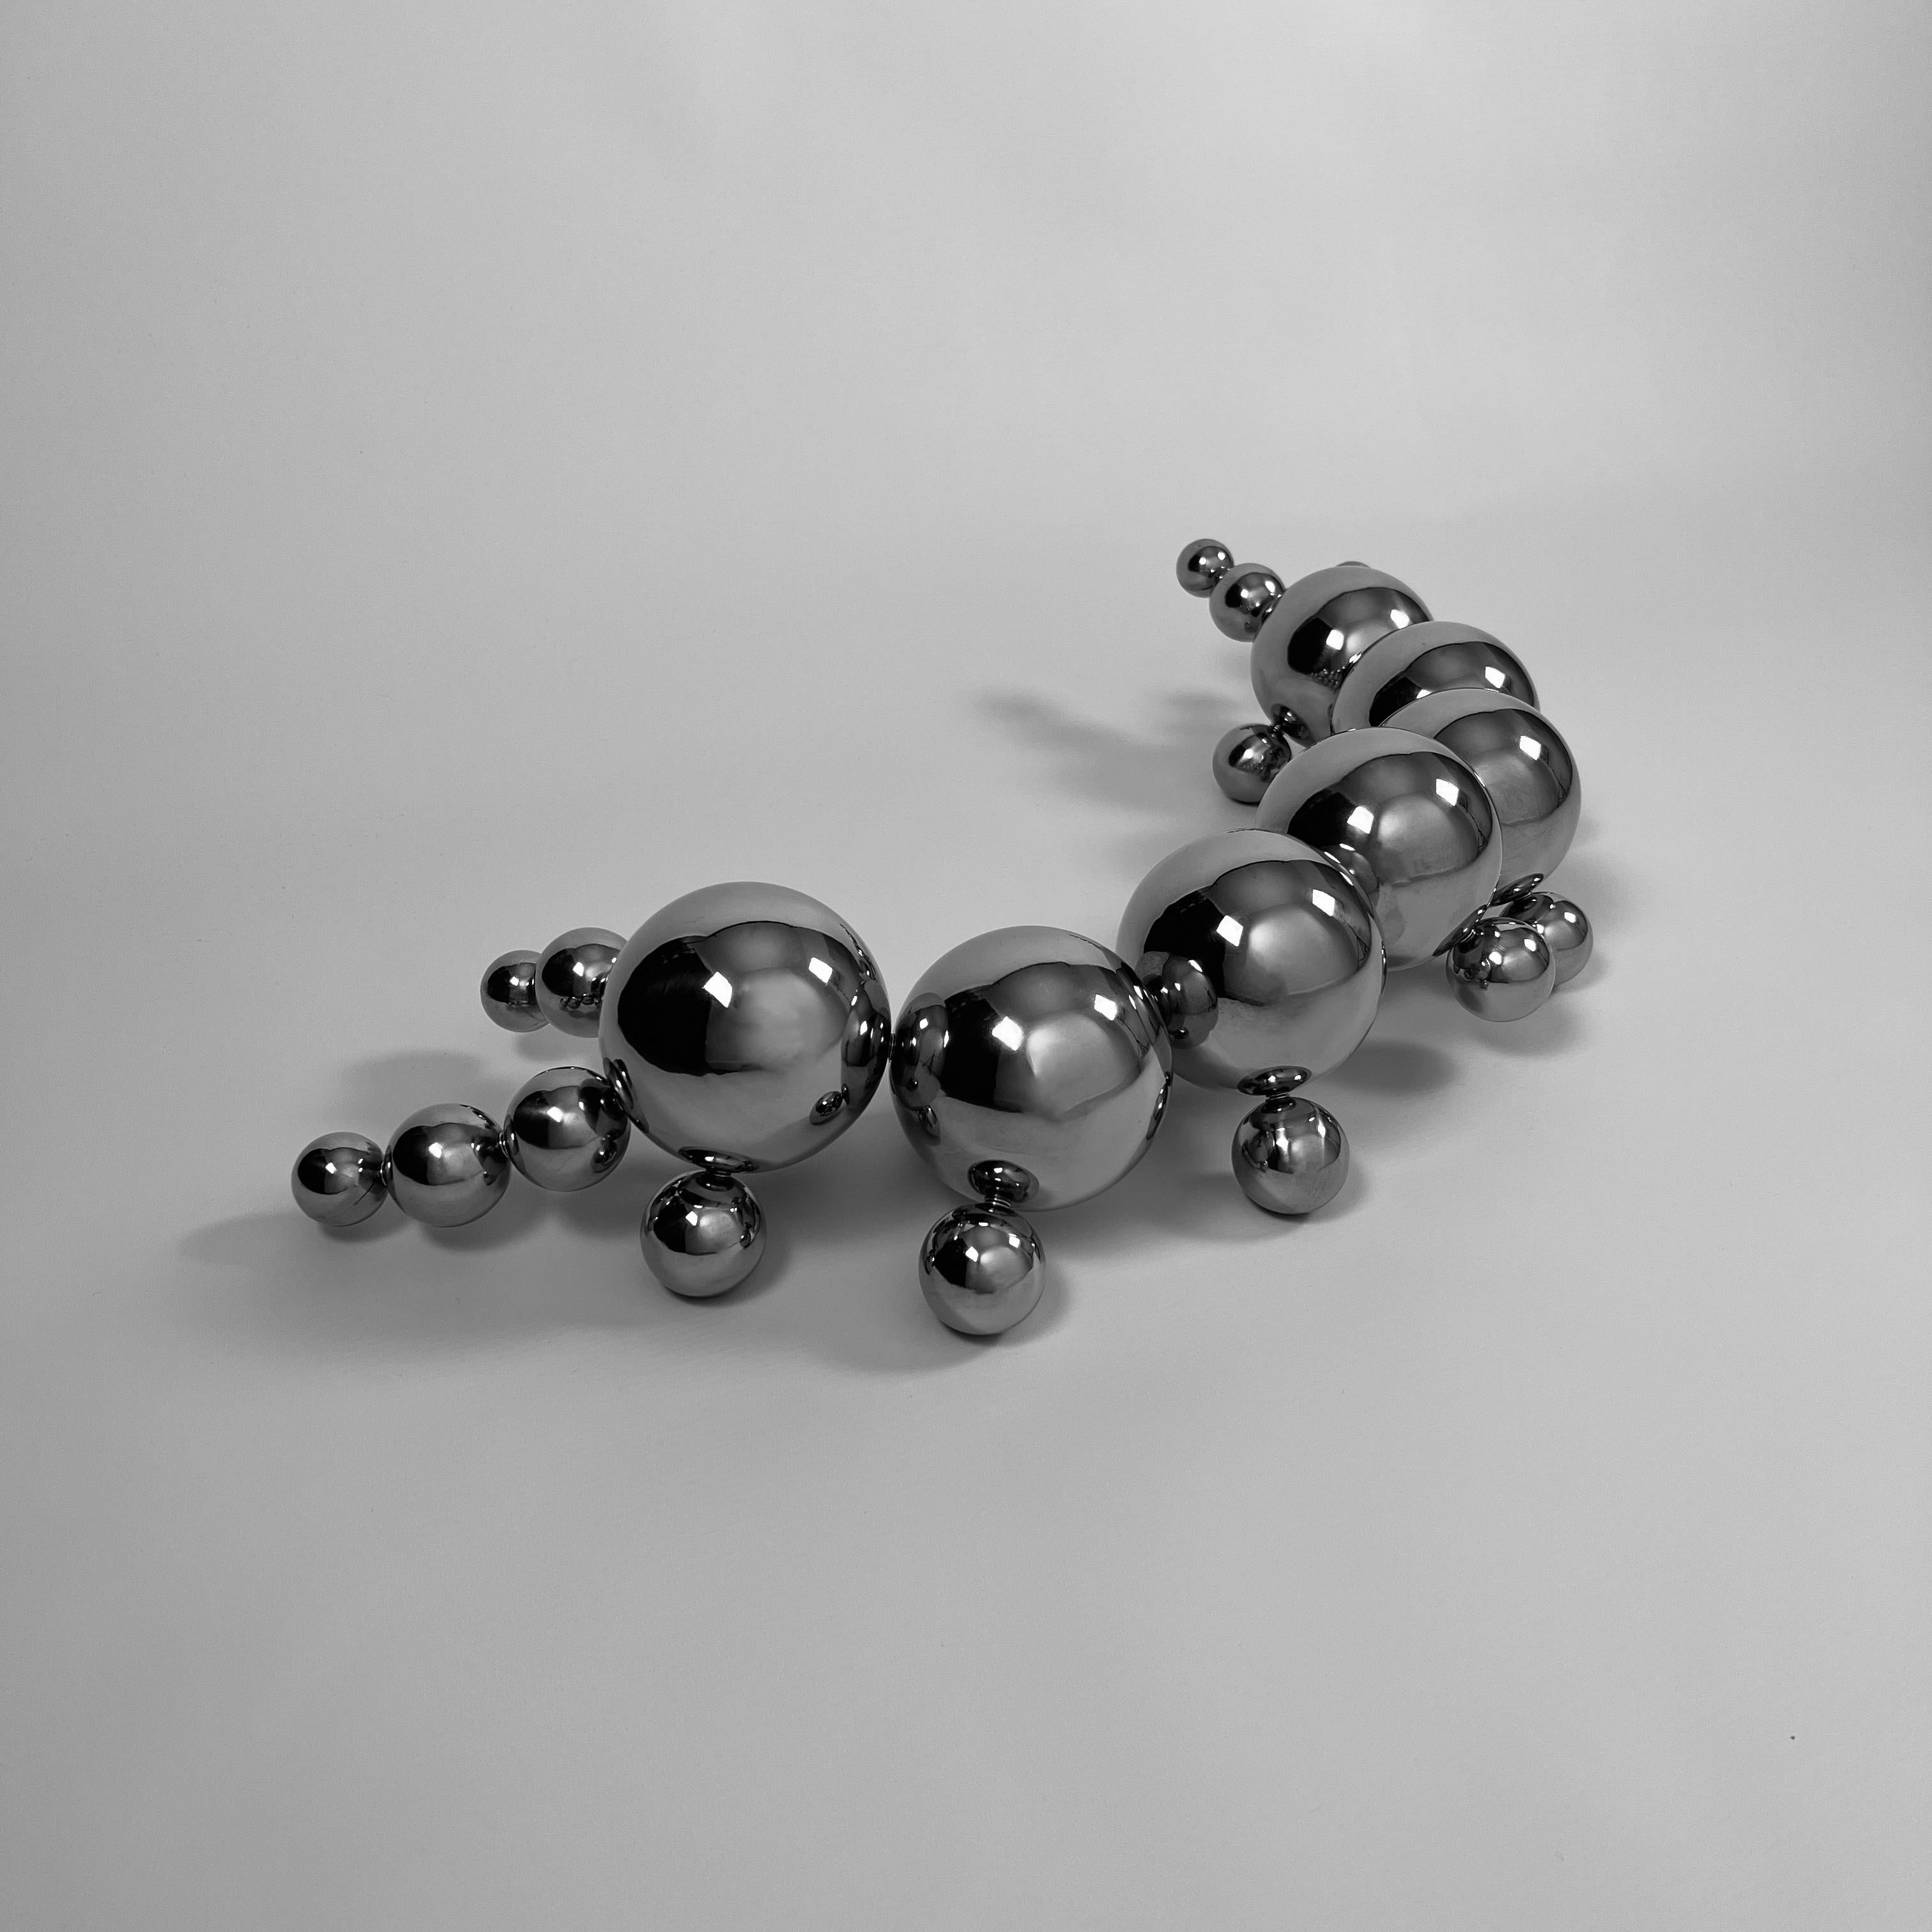 Stainless Steel Сentipede Minimalistic Bug Sculpture 10